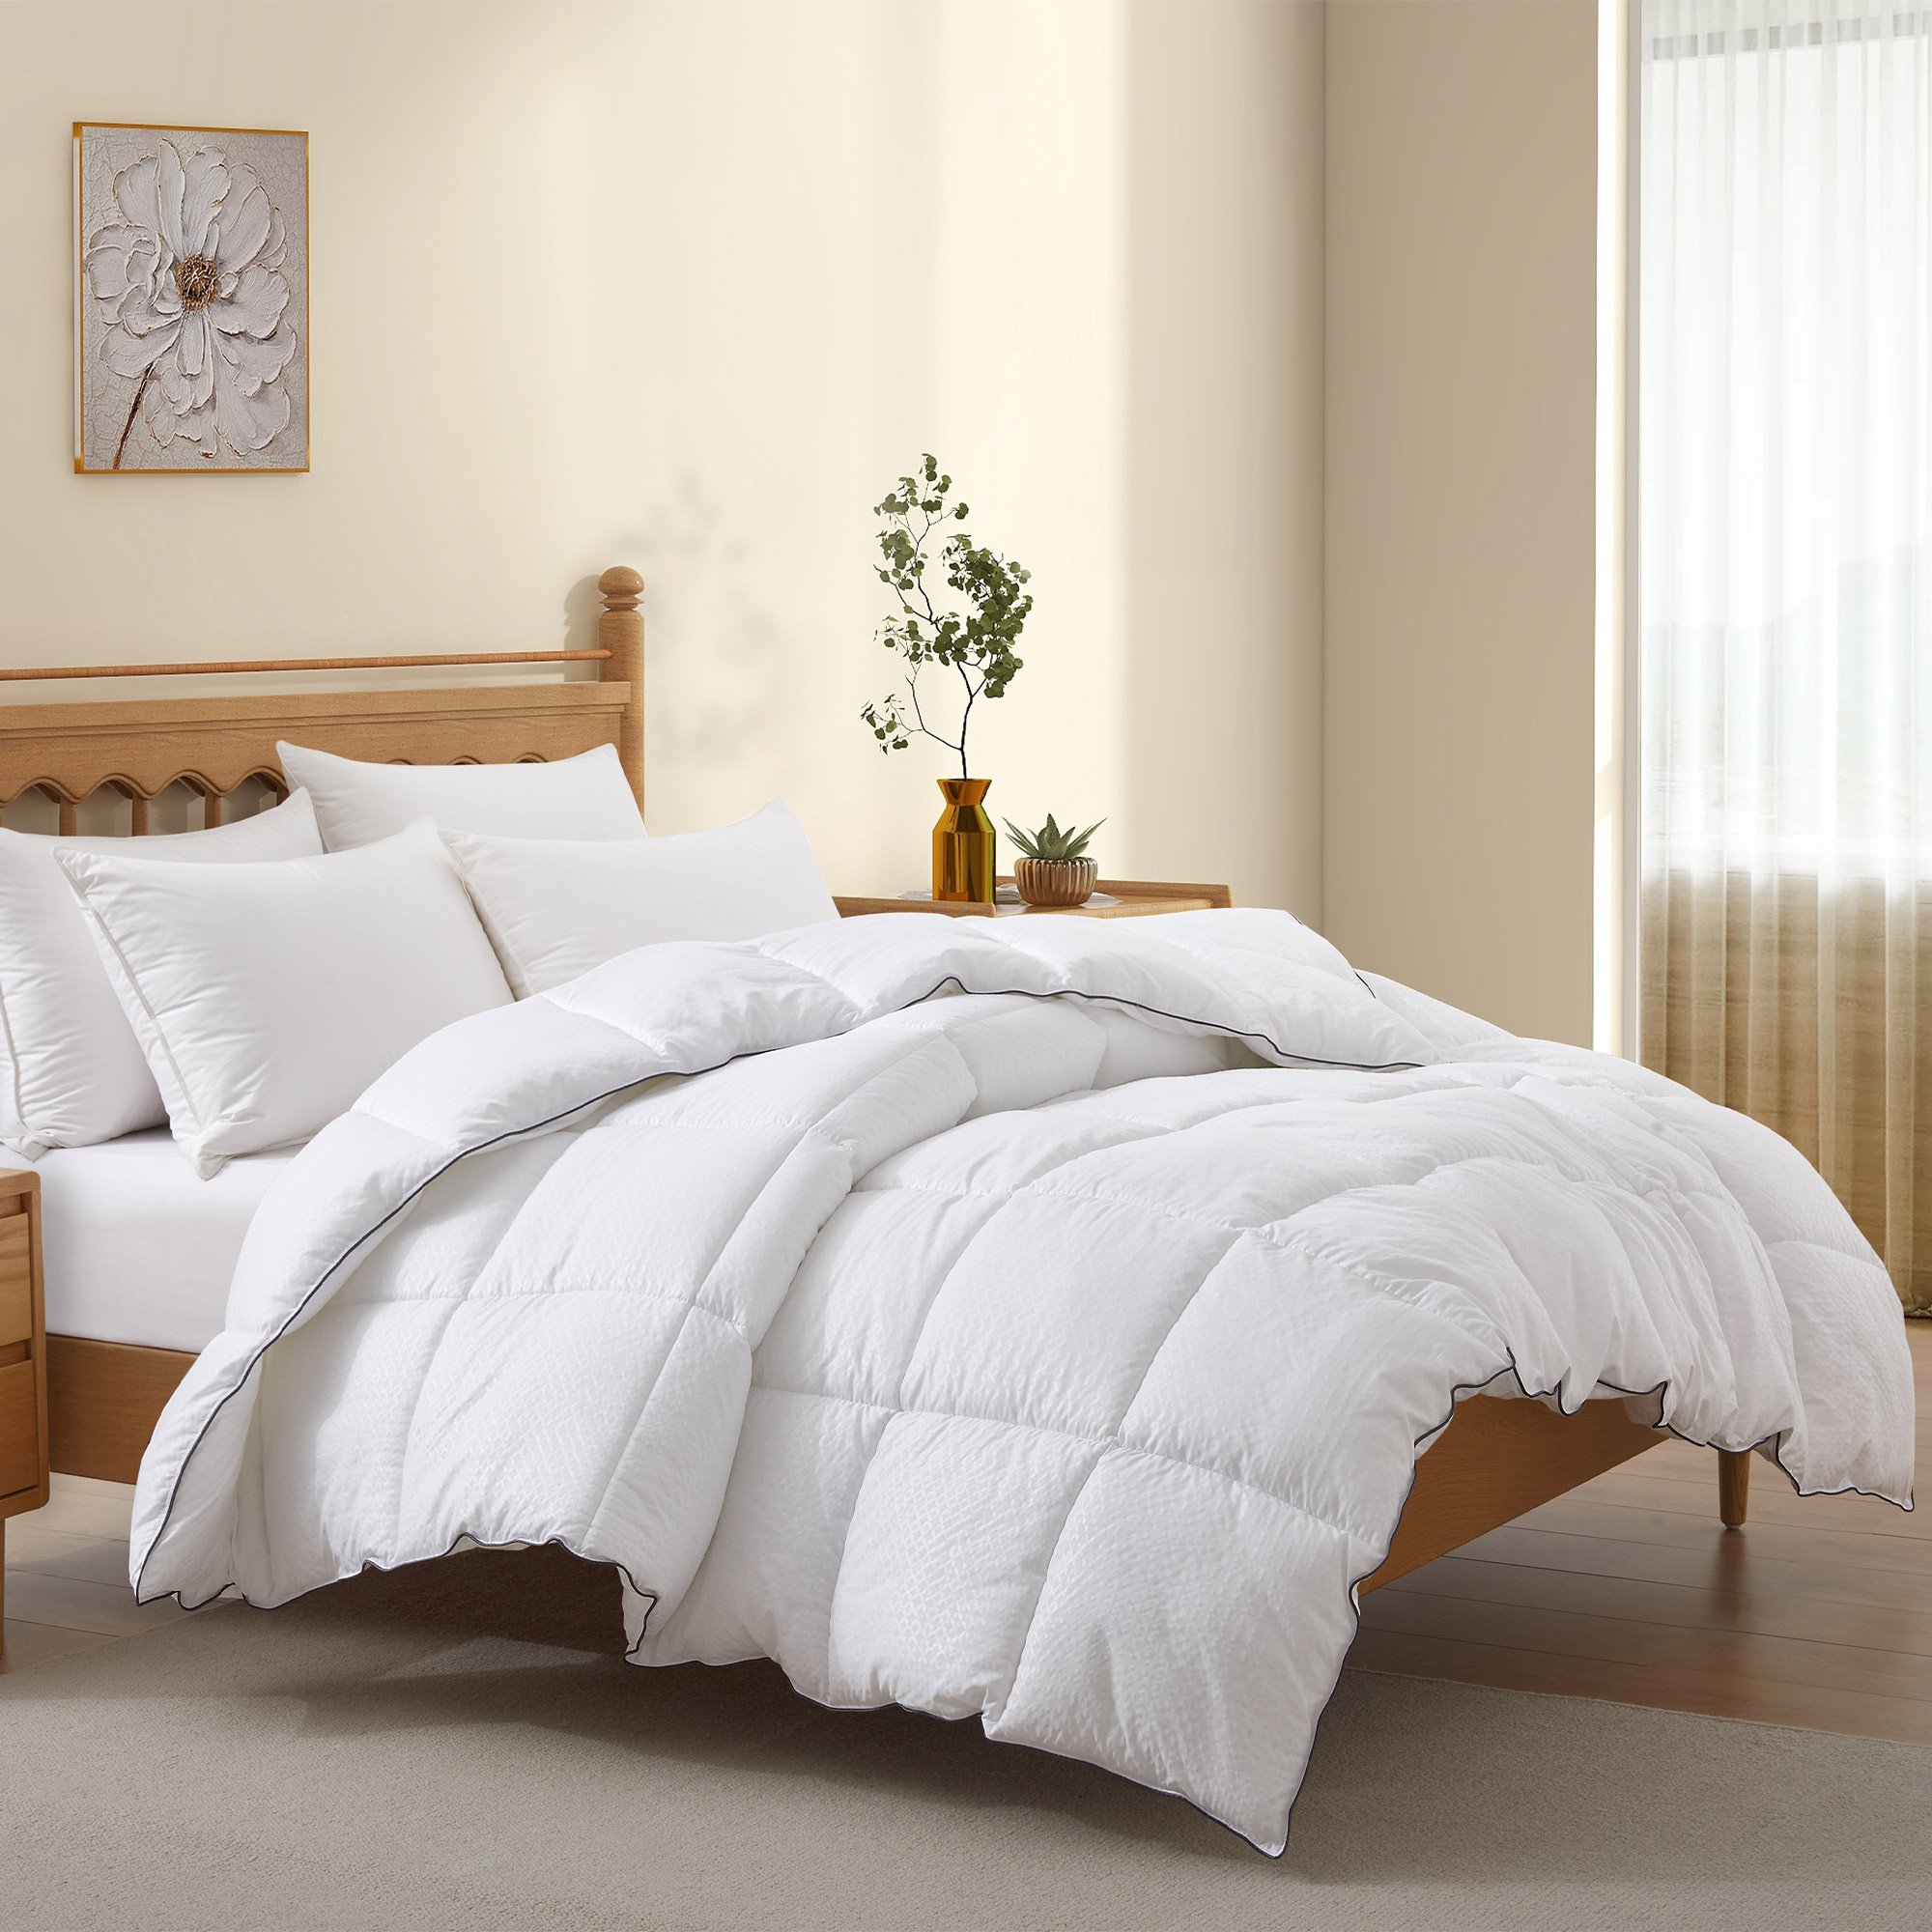 All Seasons Down Alternative Comforter - White, Twin